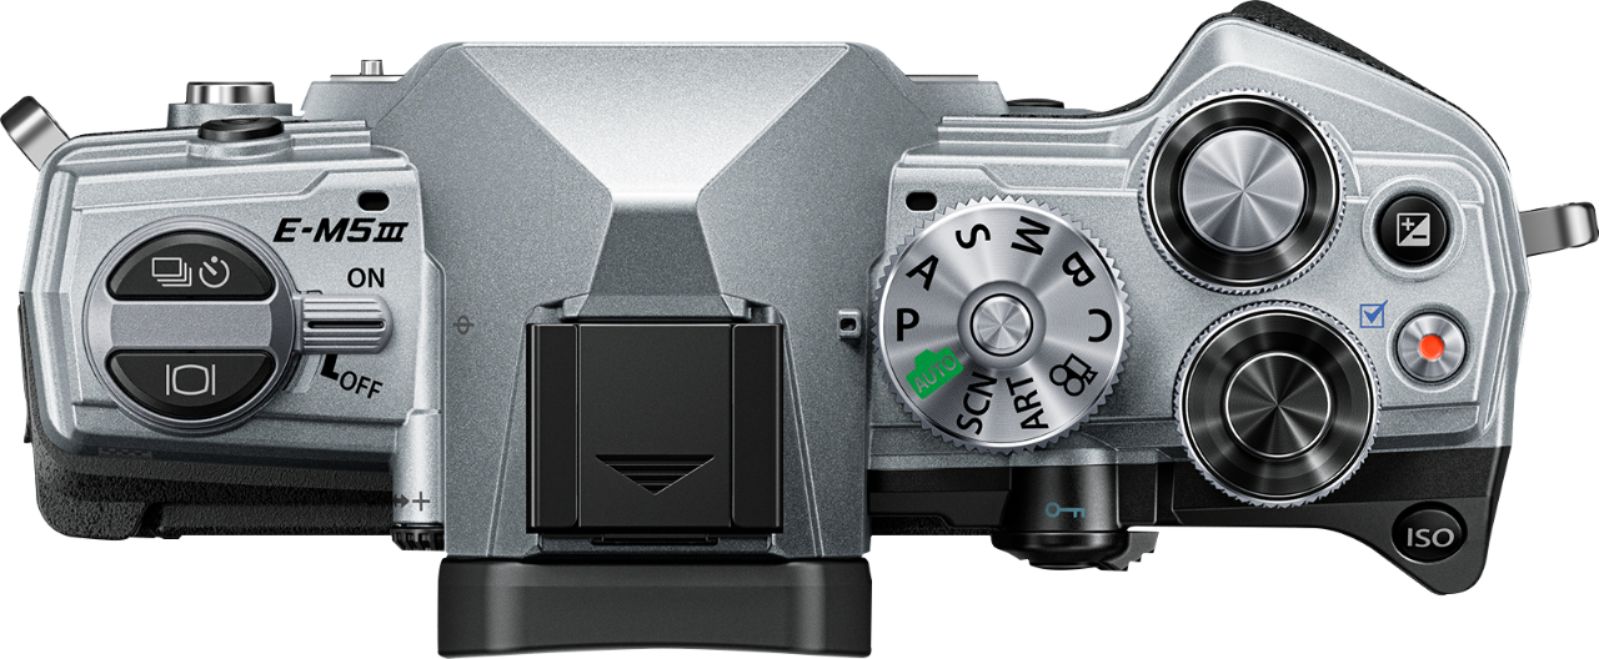 Best Buy: Olympus OM-D E-M5 Mark III Mirrorless Camera with 14 